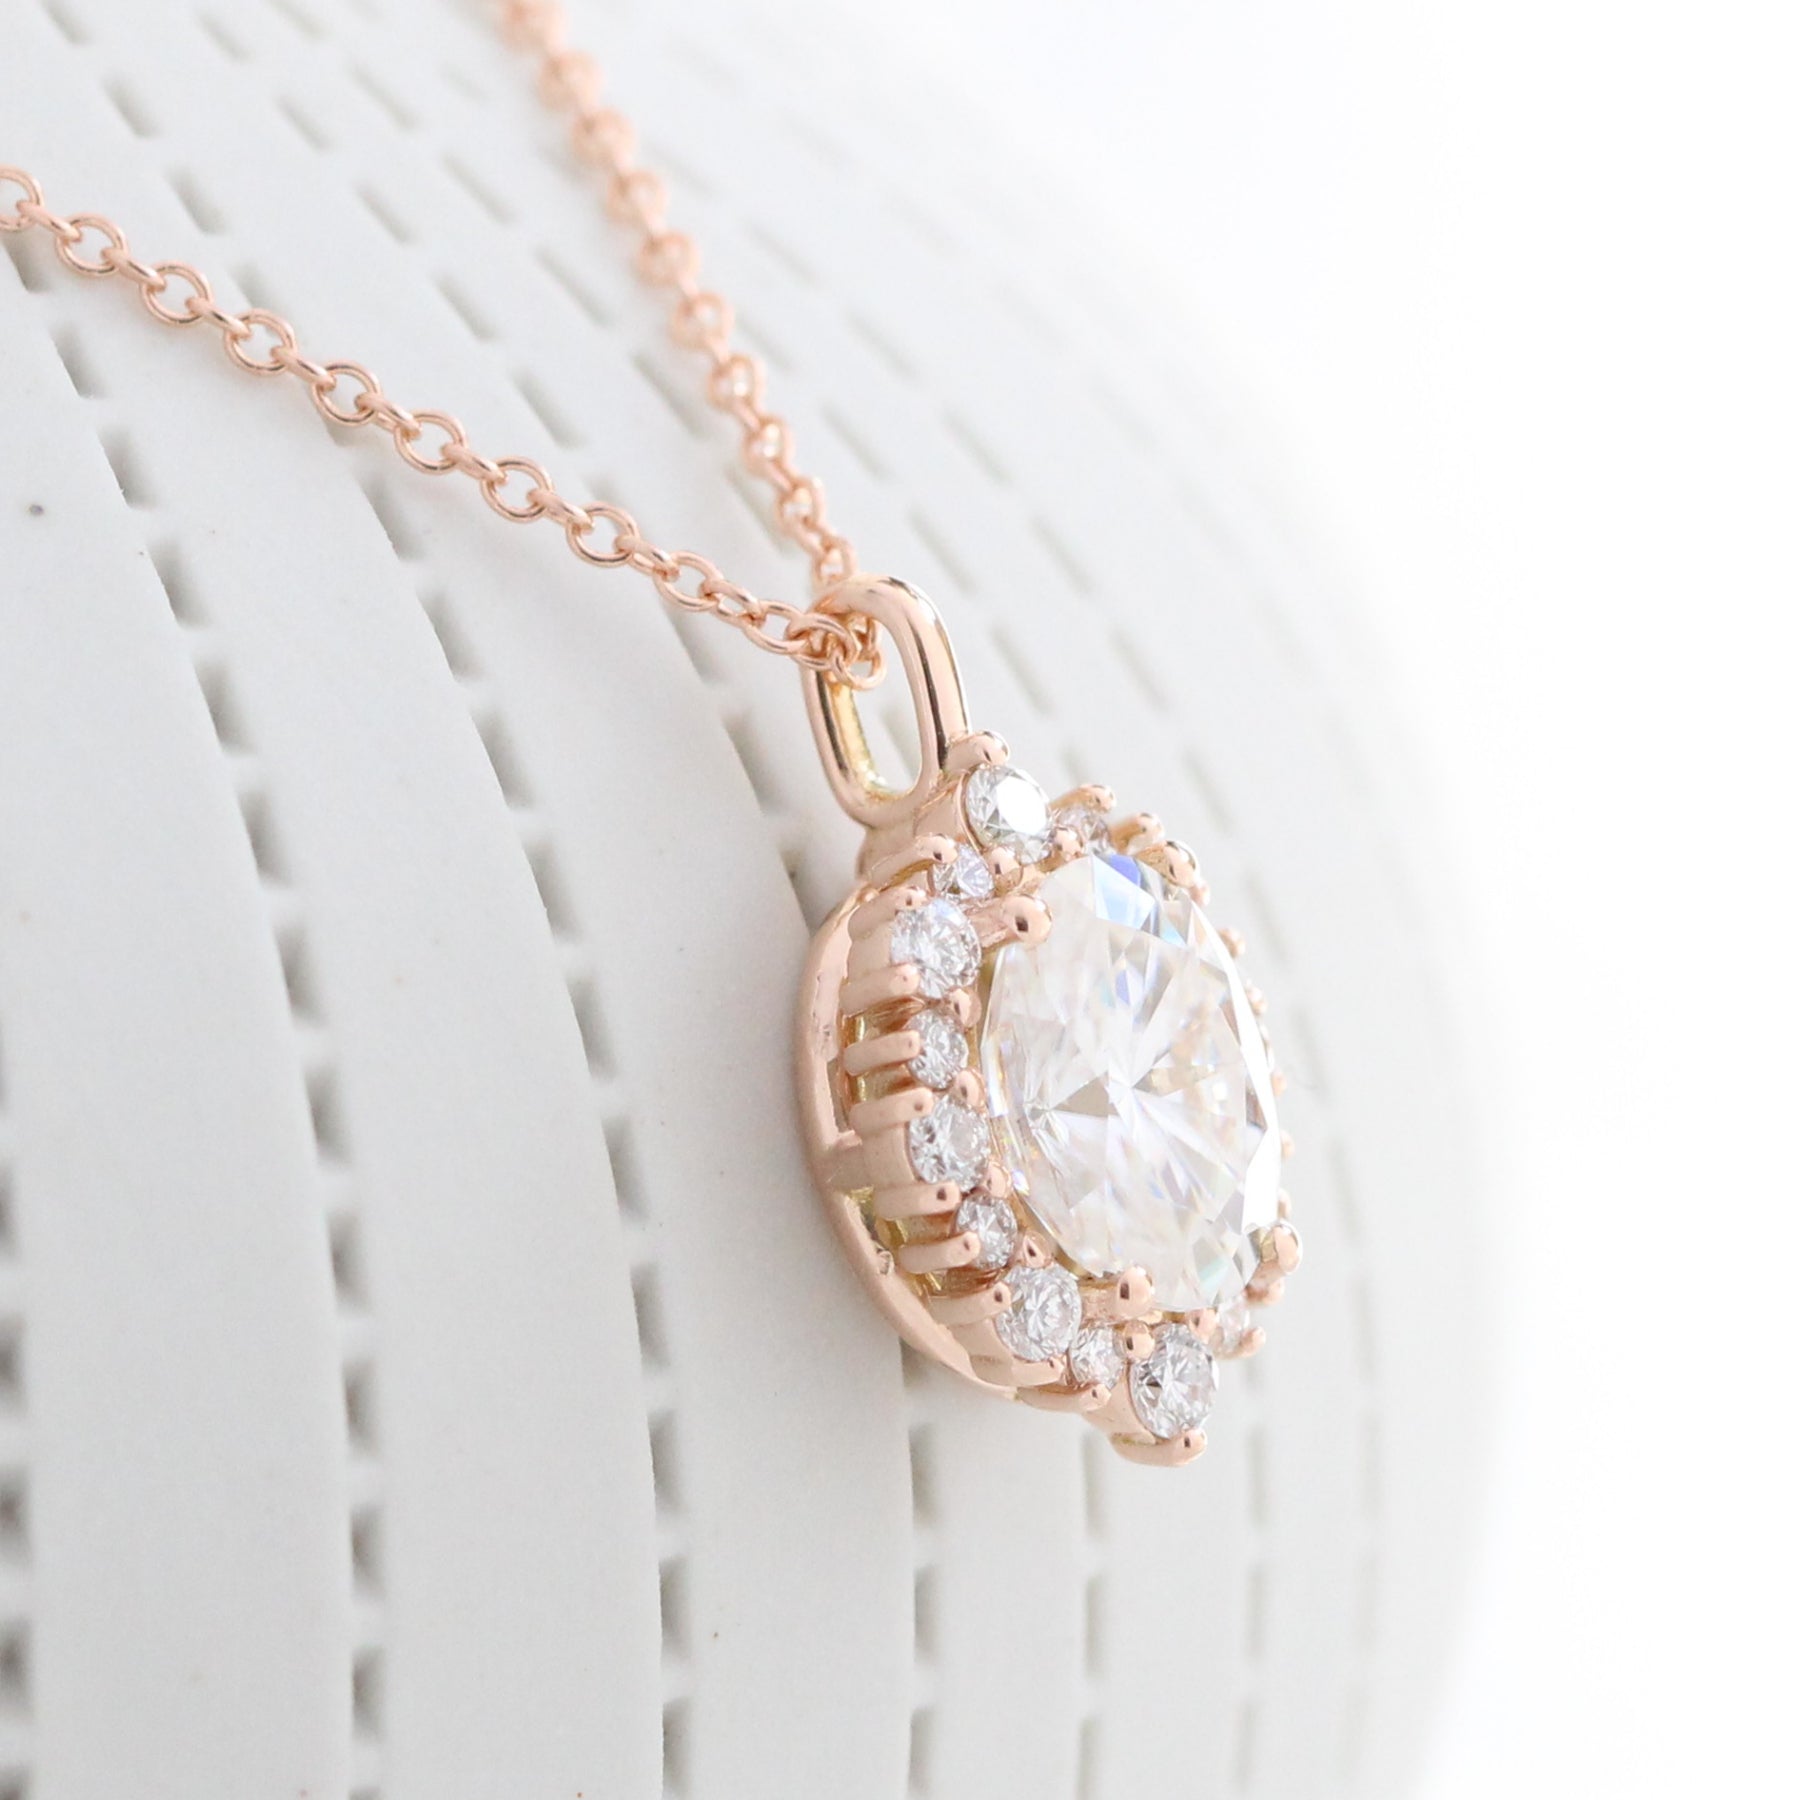 Tiara halo diamond oval moissanite pendant rose gold drop necklace la more design jewelry